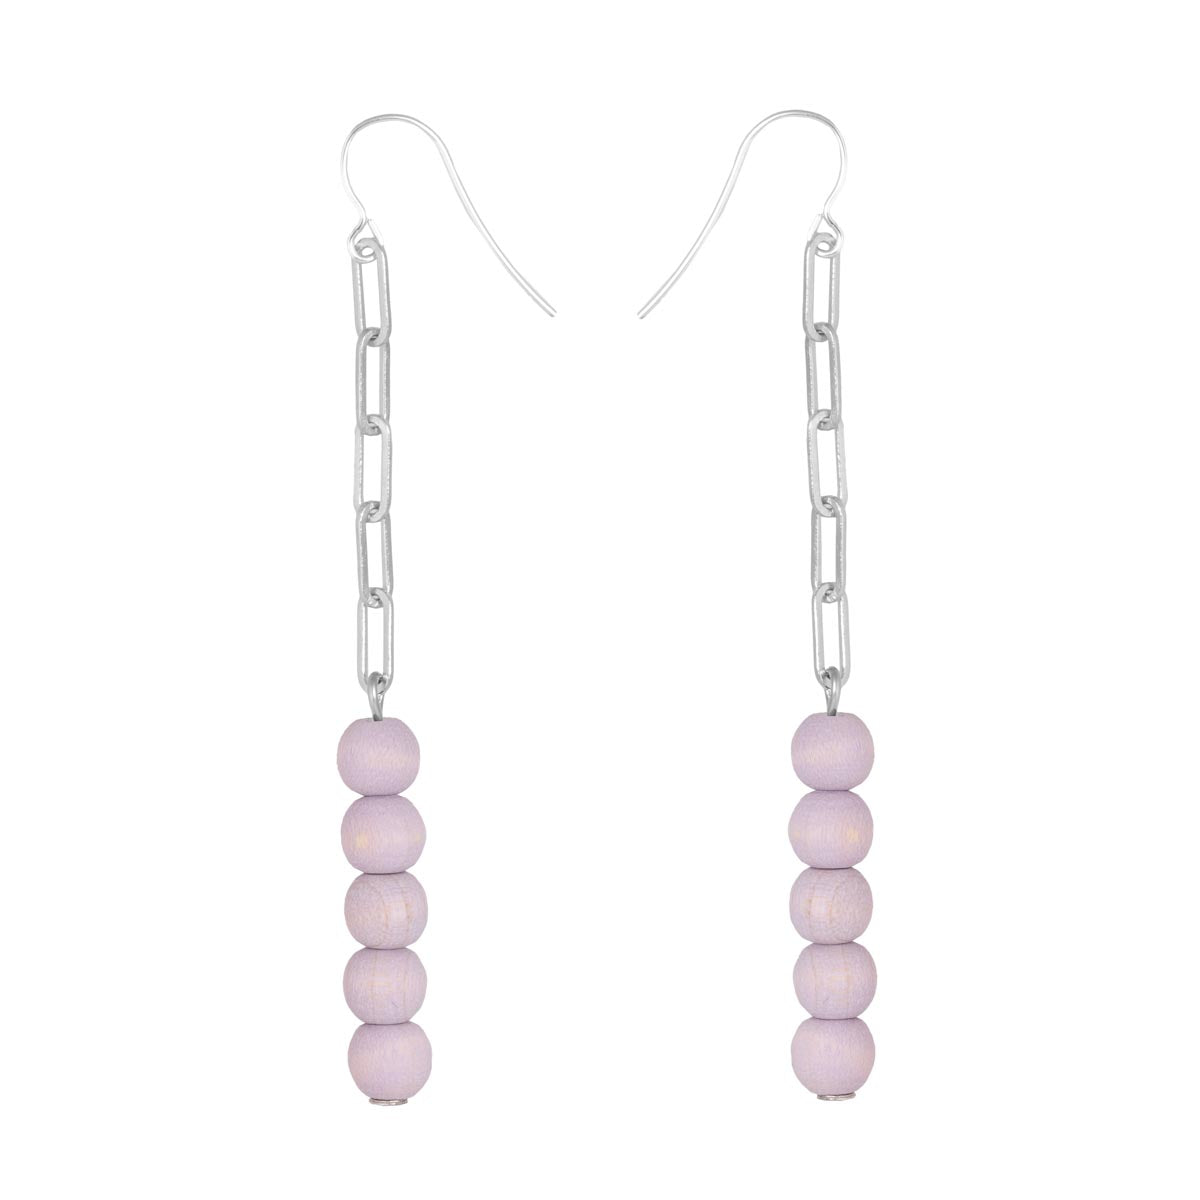 Neela earrings, lavender